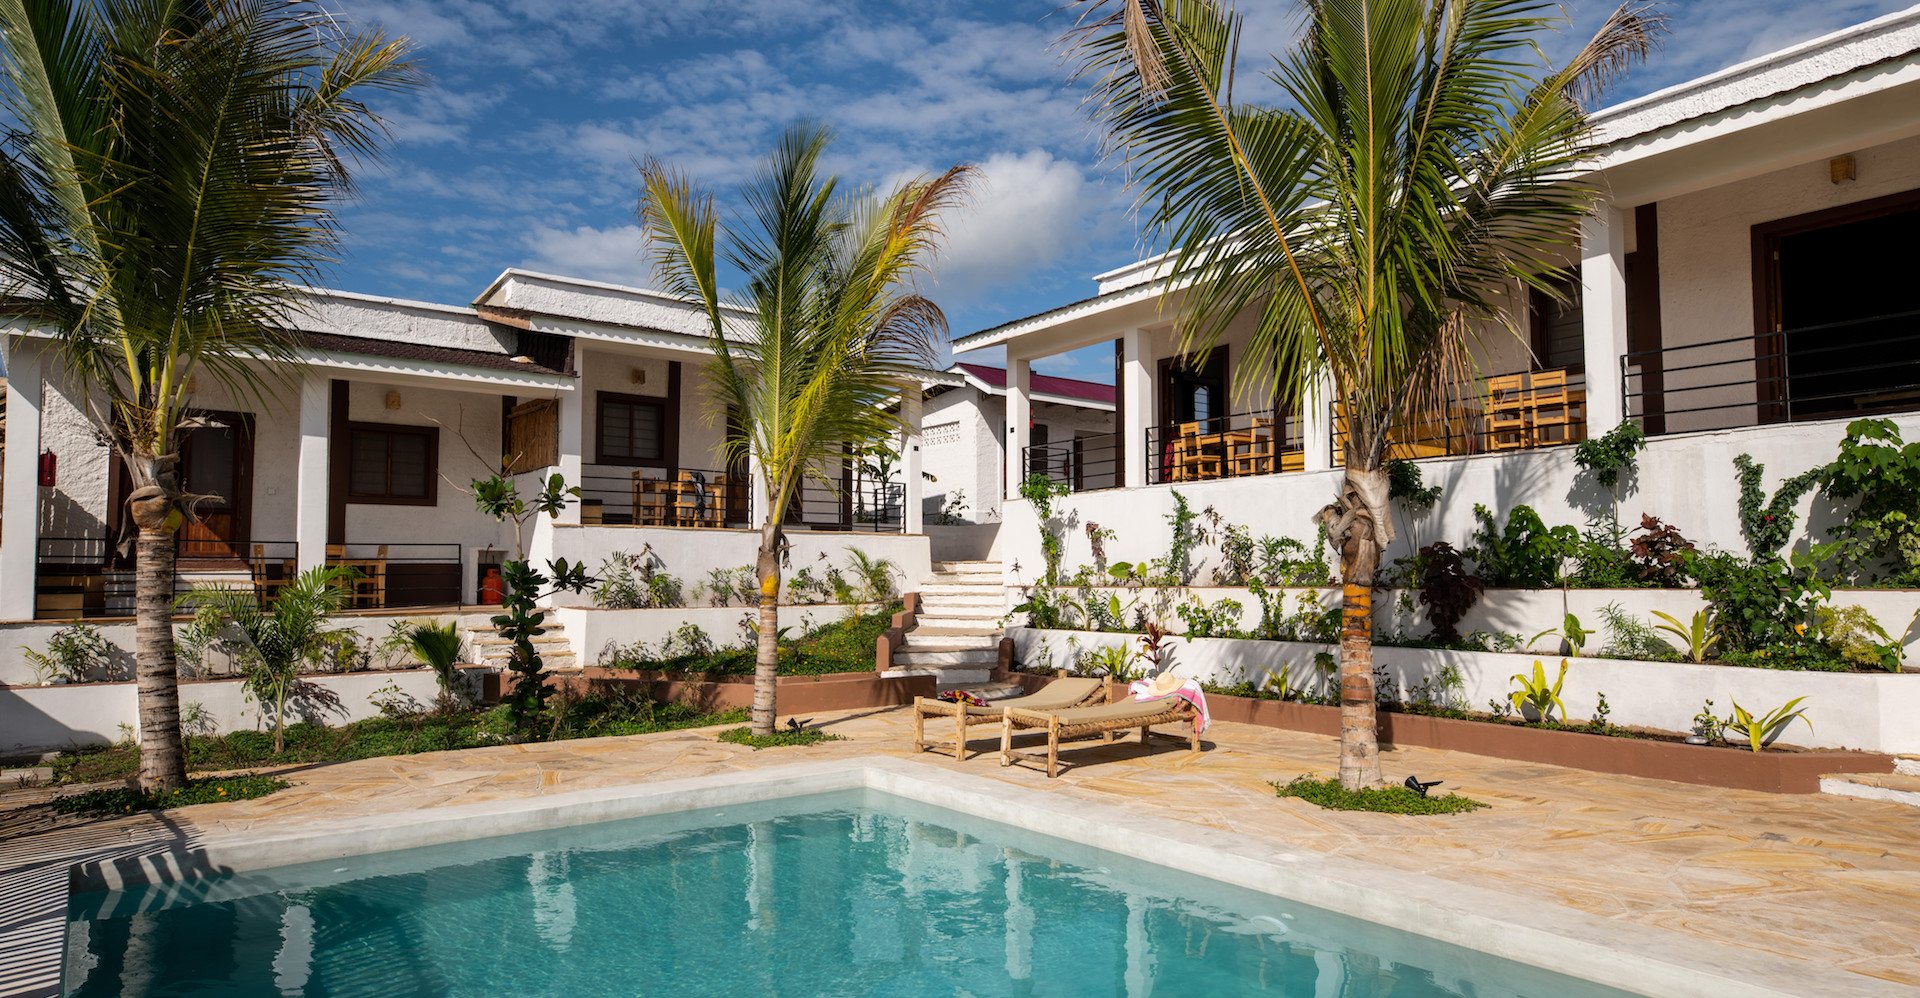 Our Zanzibar Group Nyumbani Residence pool palm trees and apartments